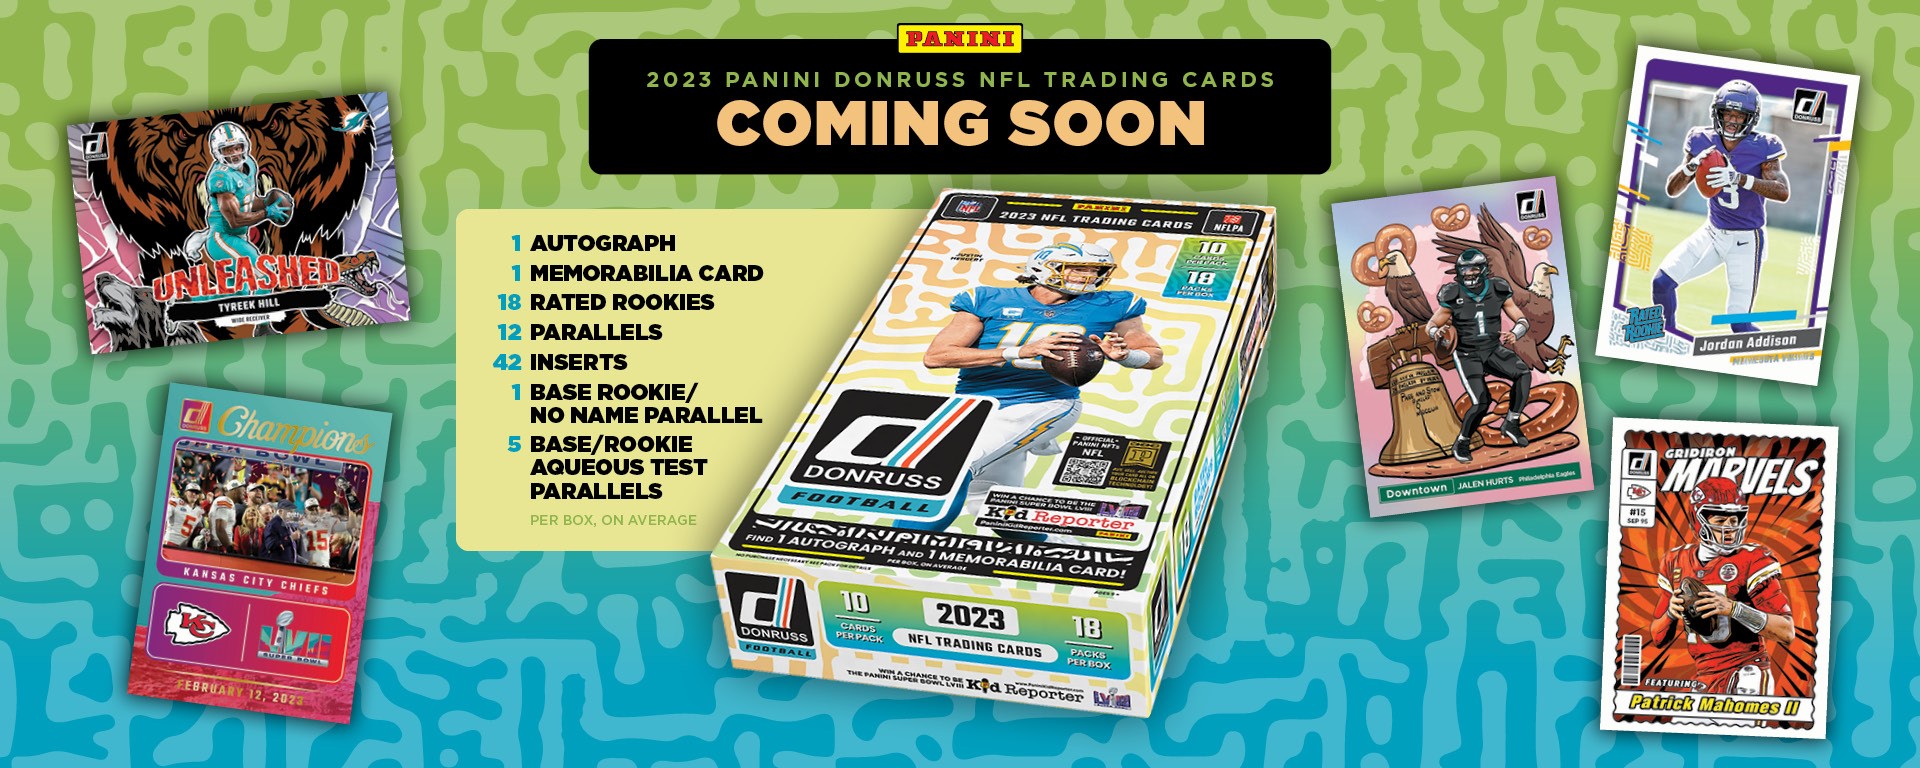 2023 Panini Donruss NFL Trading Card Box - Web - Coming Soon 